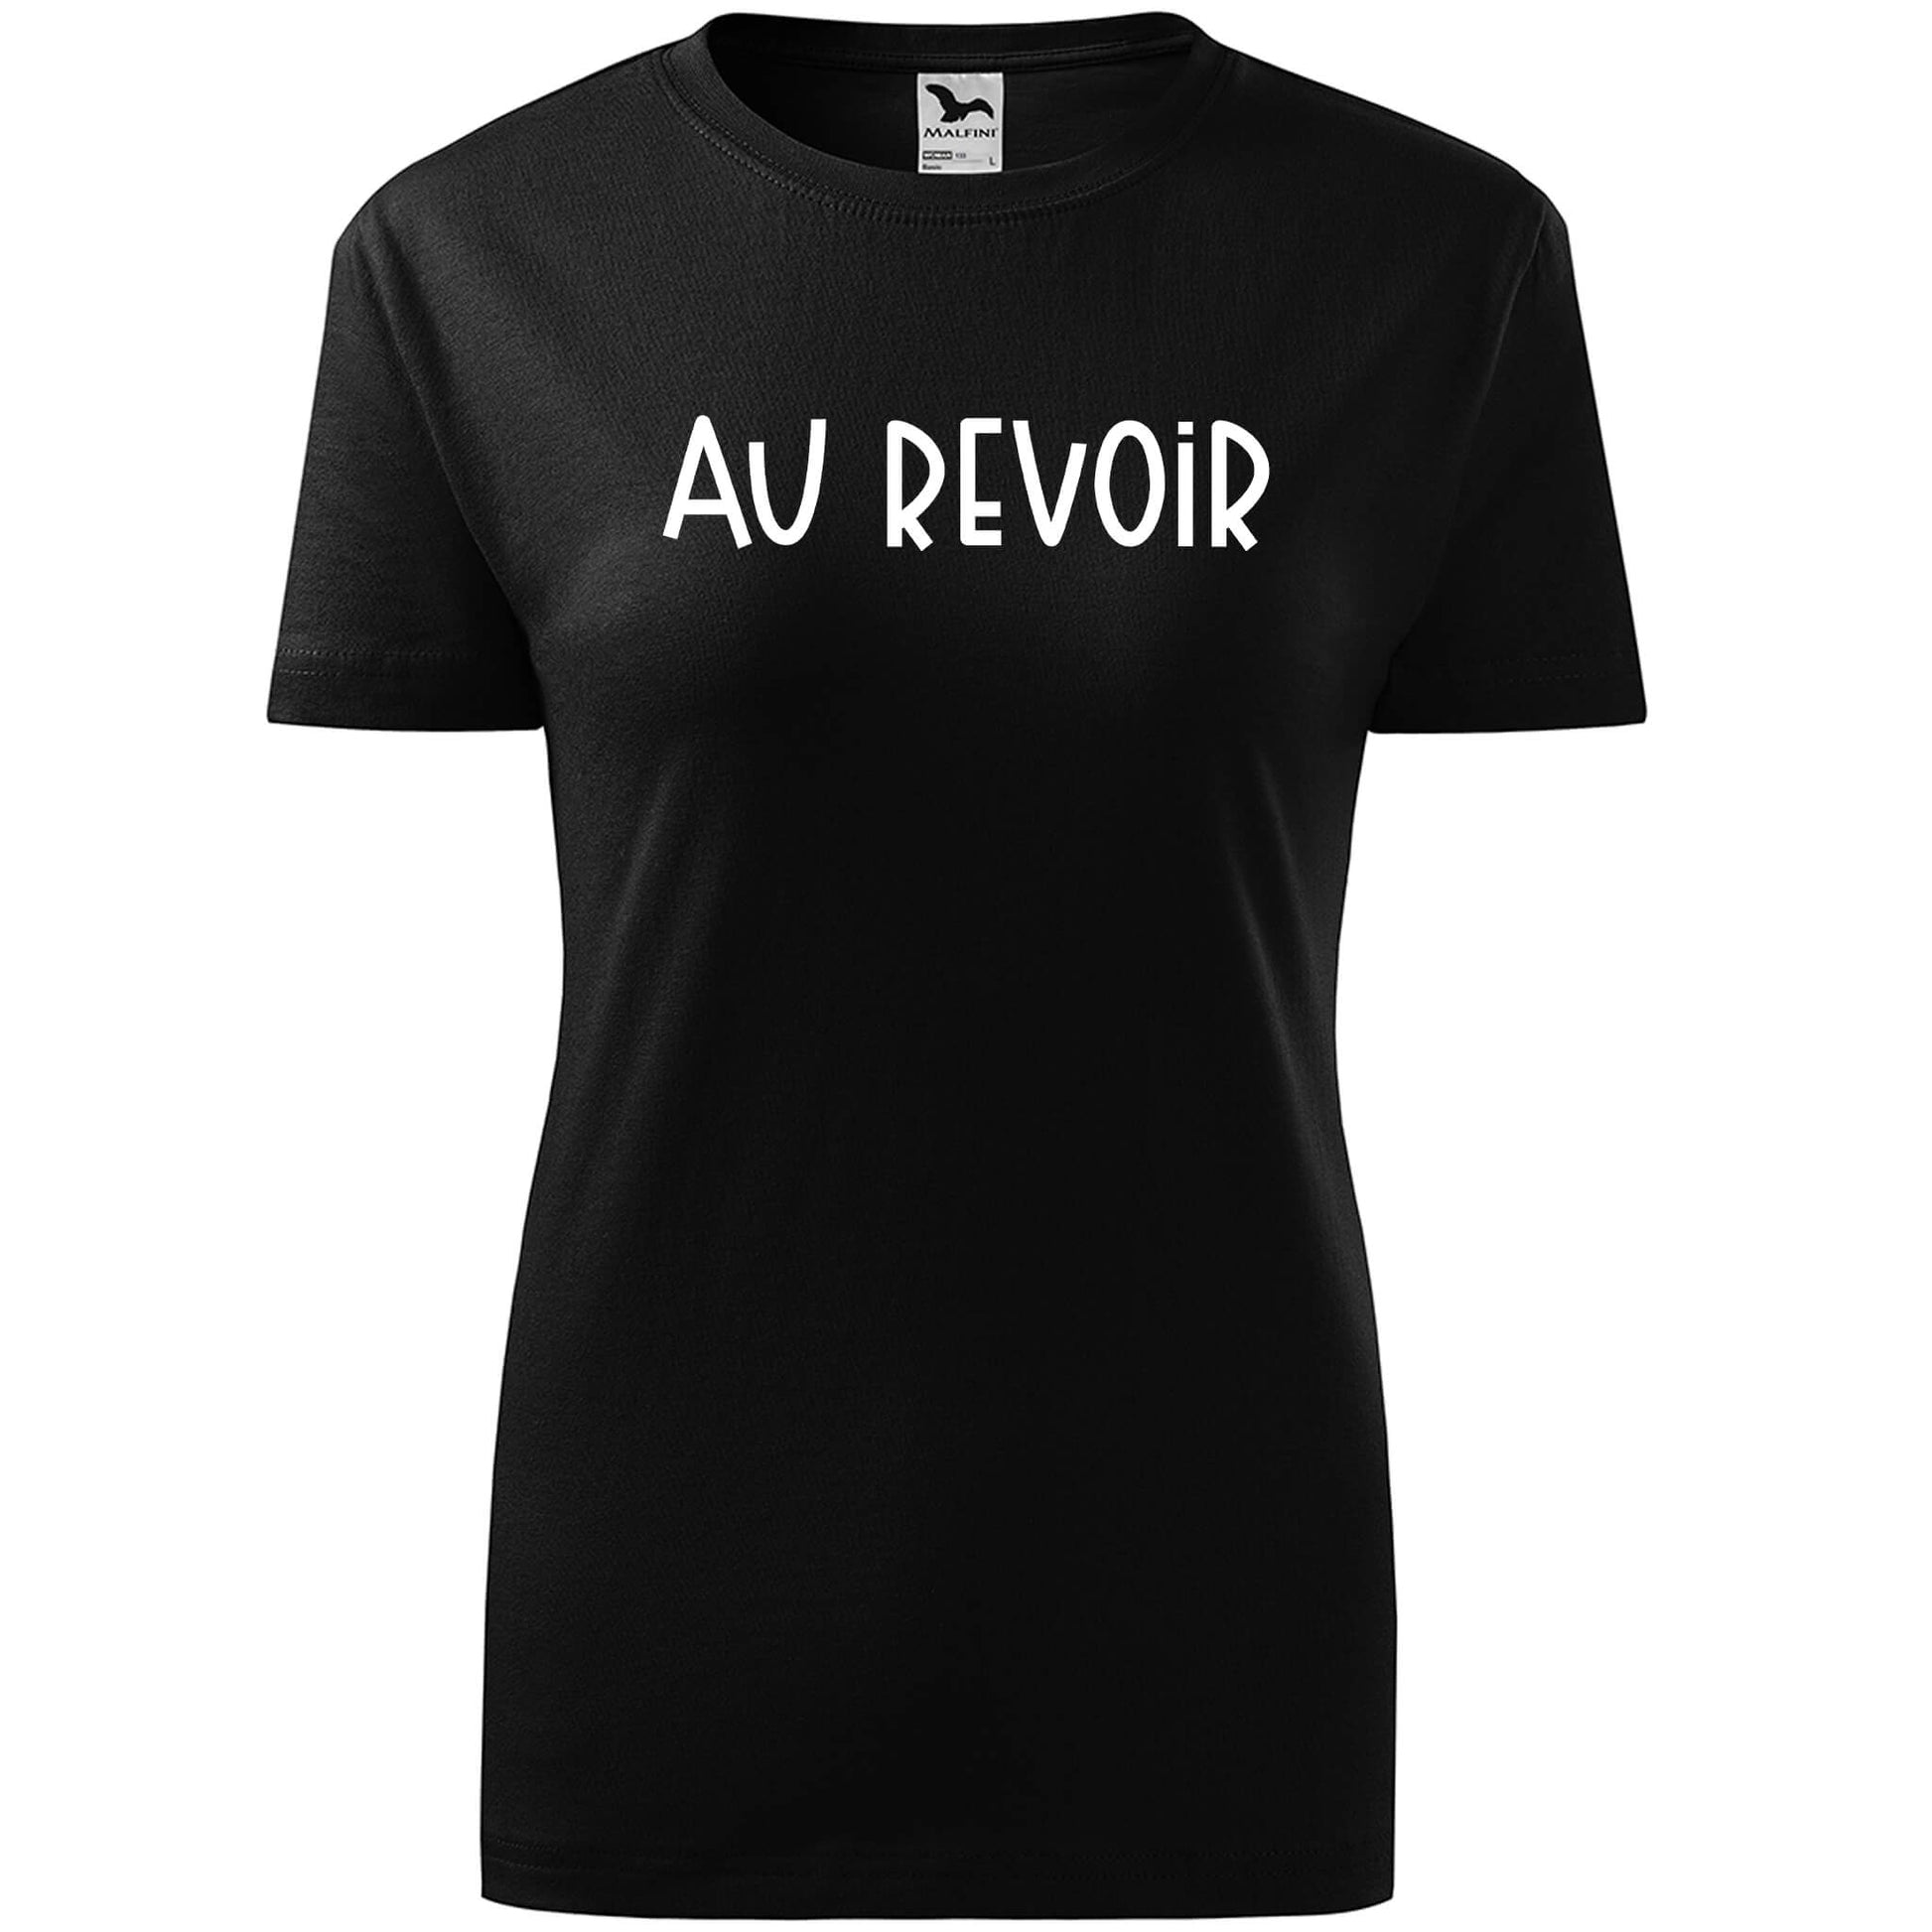 T-shirt - Au revoir - rvdesignprint